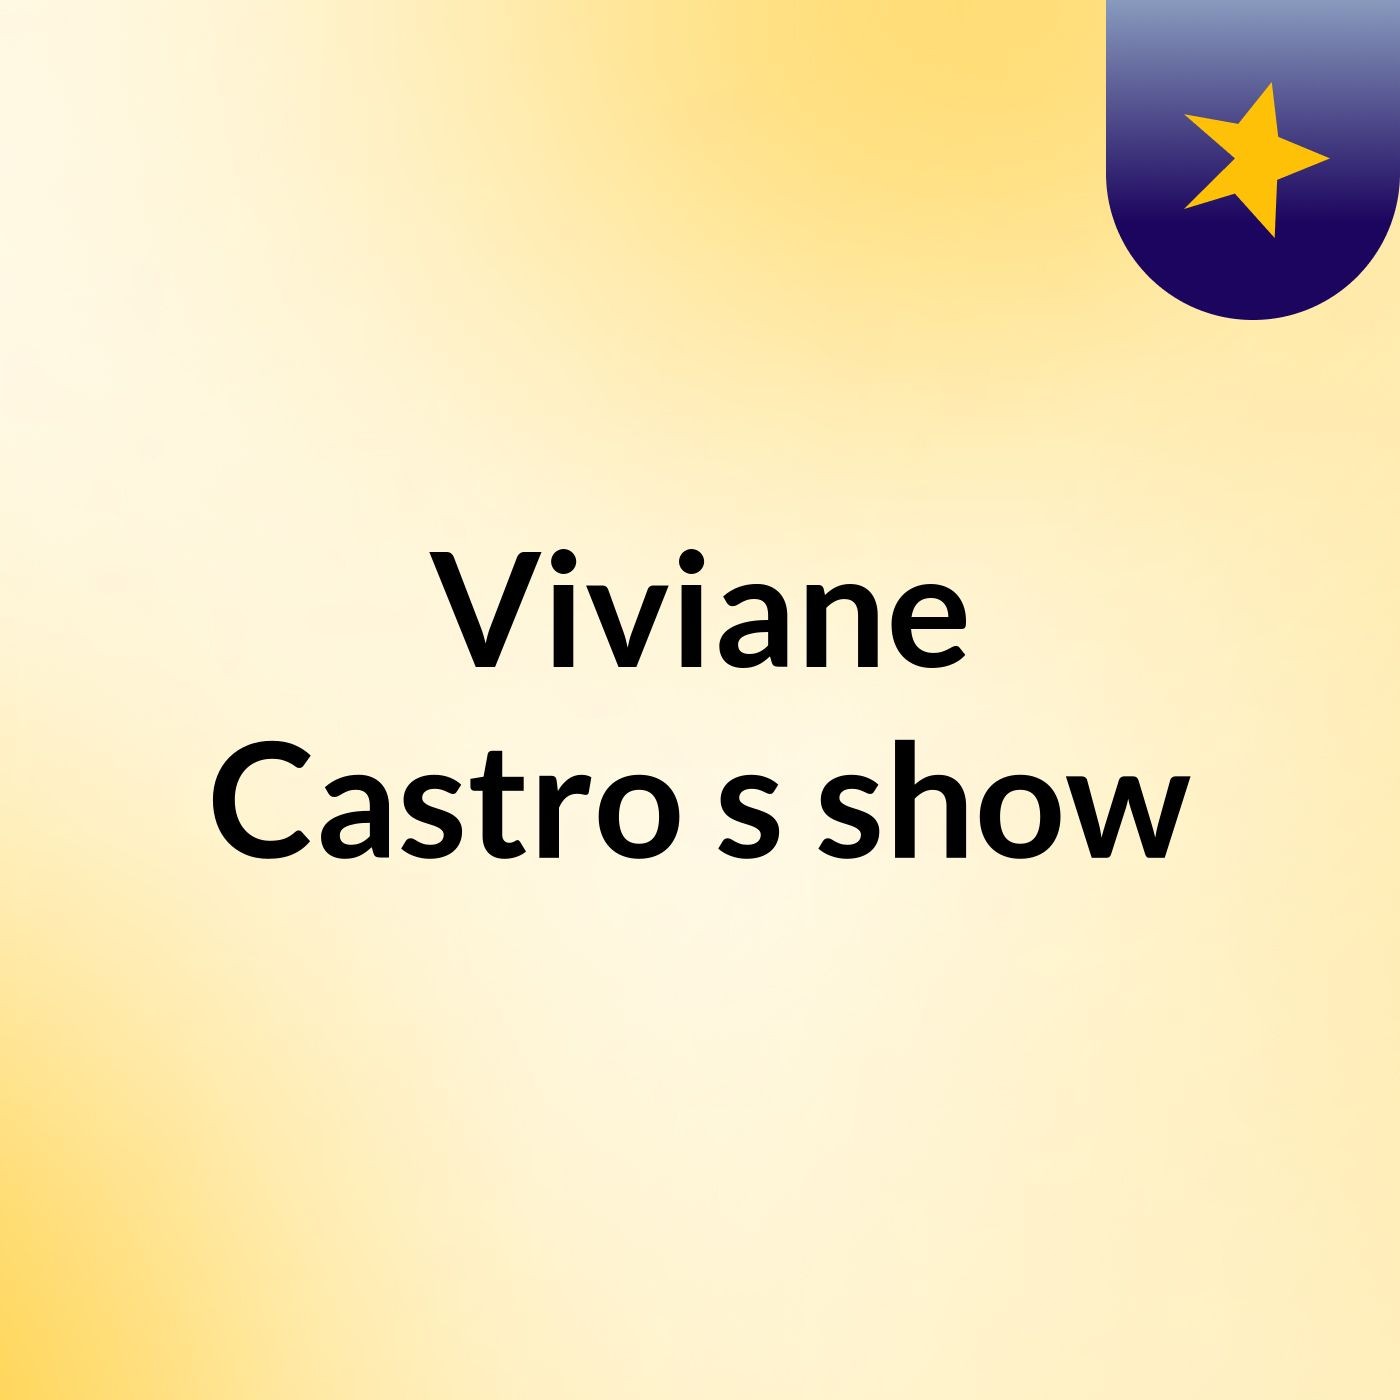 Viviane Castro's show